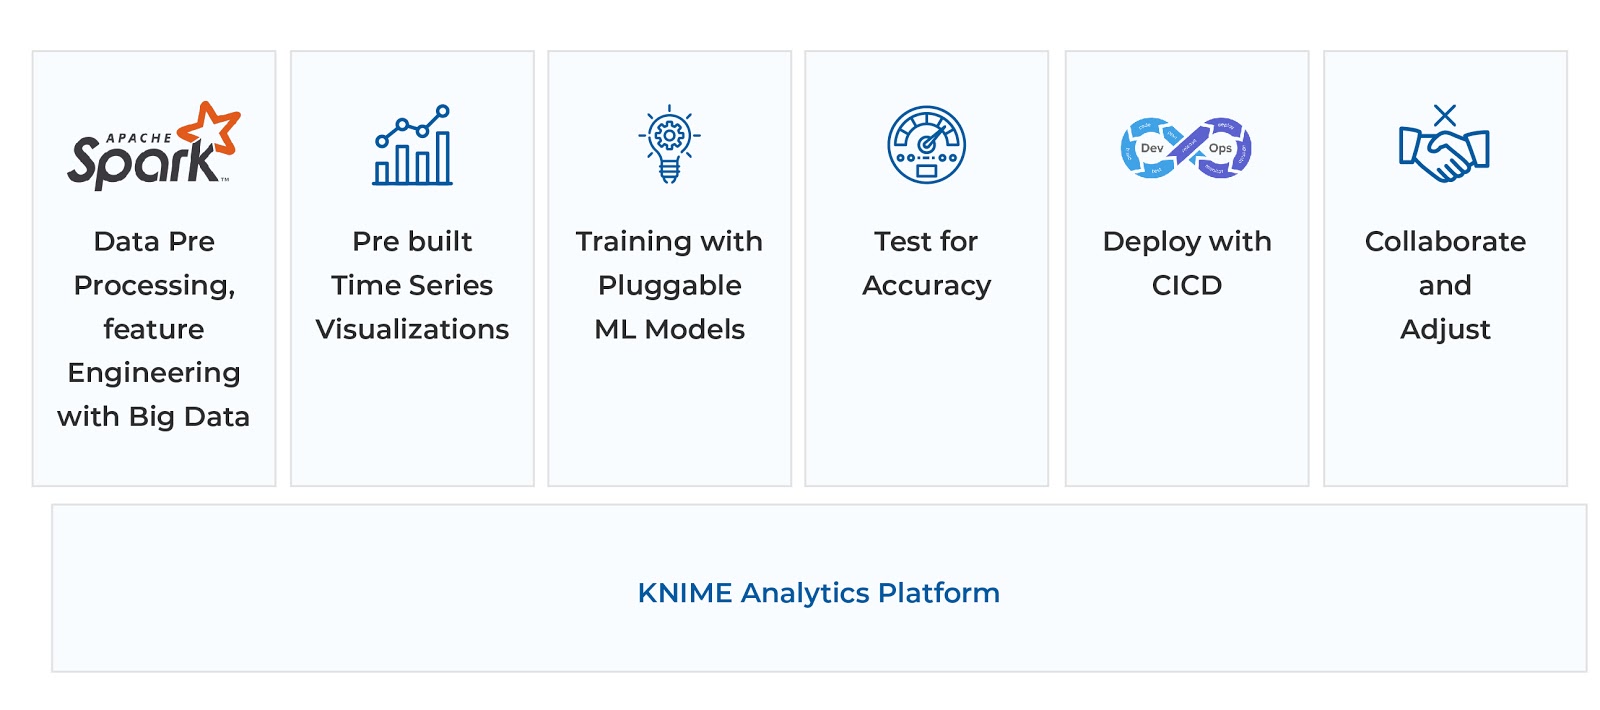 Knoldus-Forecasting-Platform-using-KNIME-Software